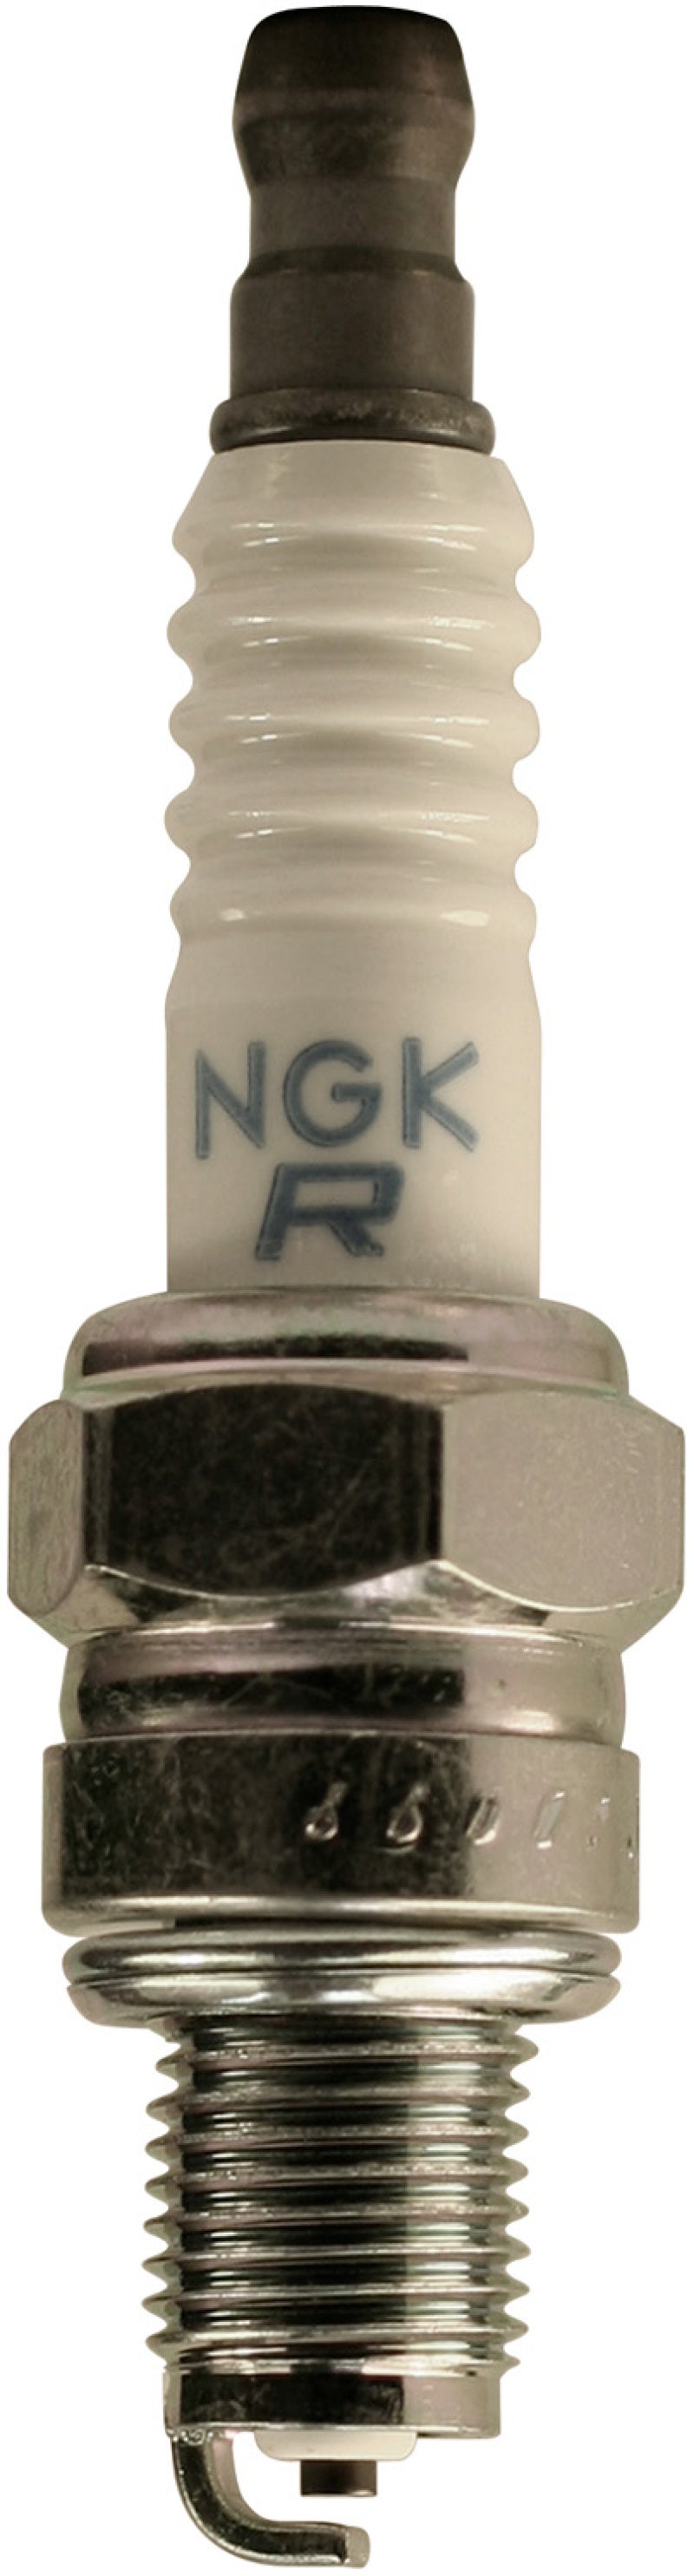 NGK Copper Core Spark Plug Box of 10 (LR8B)